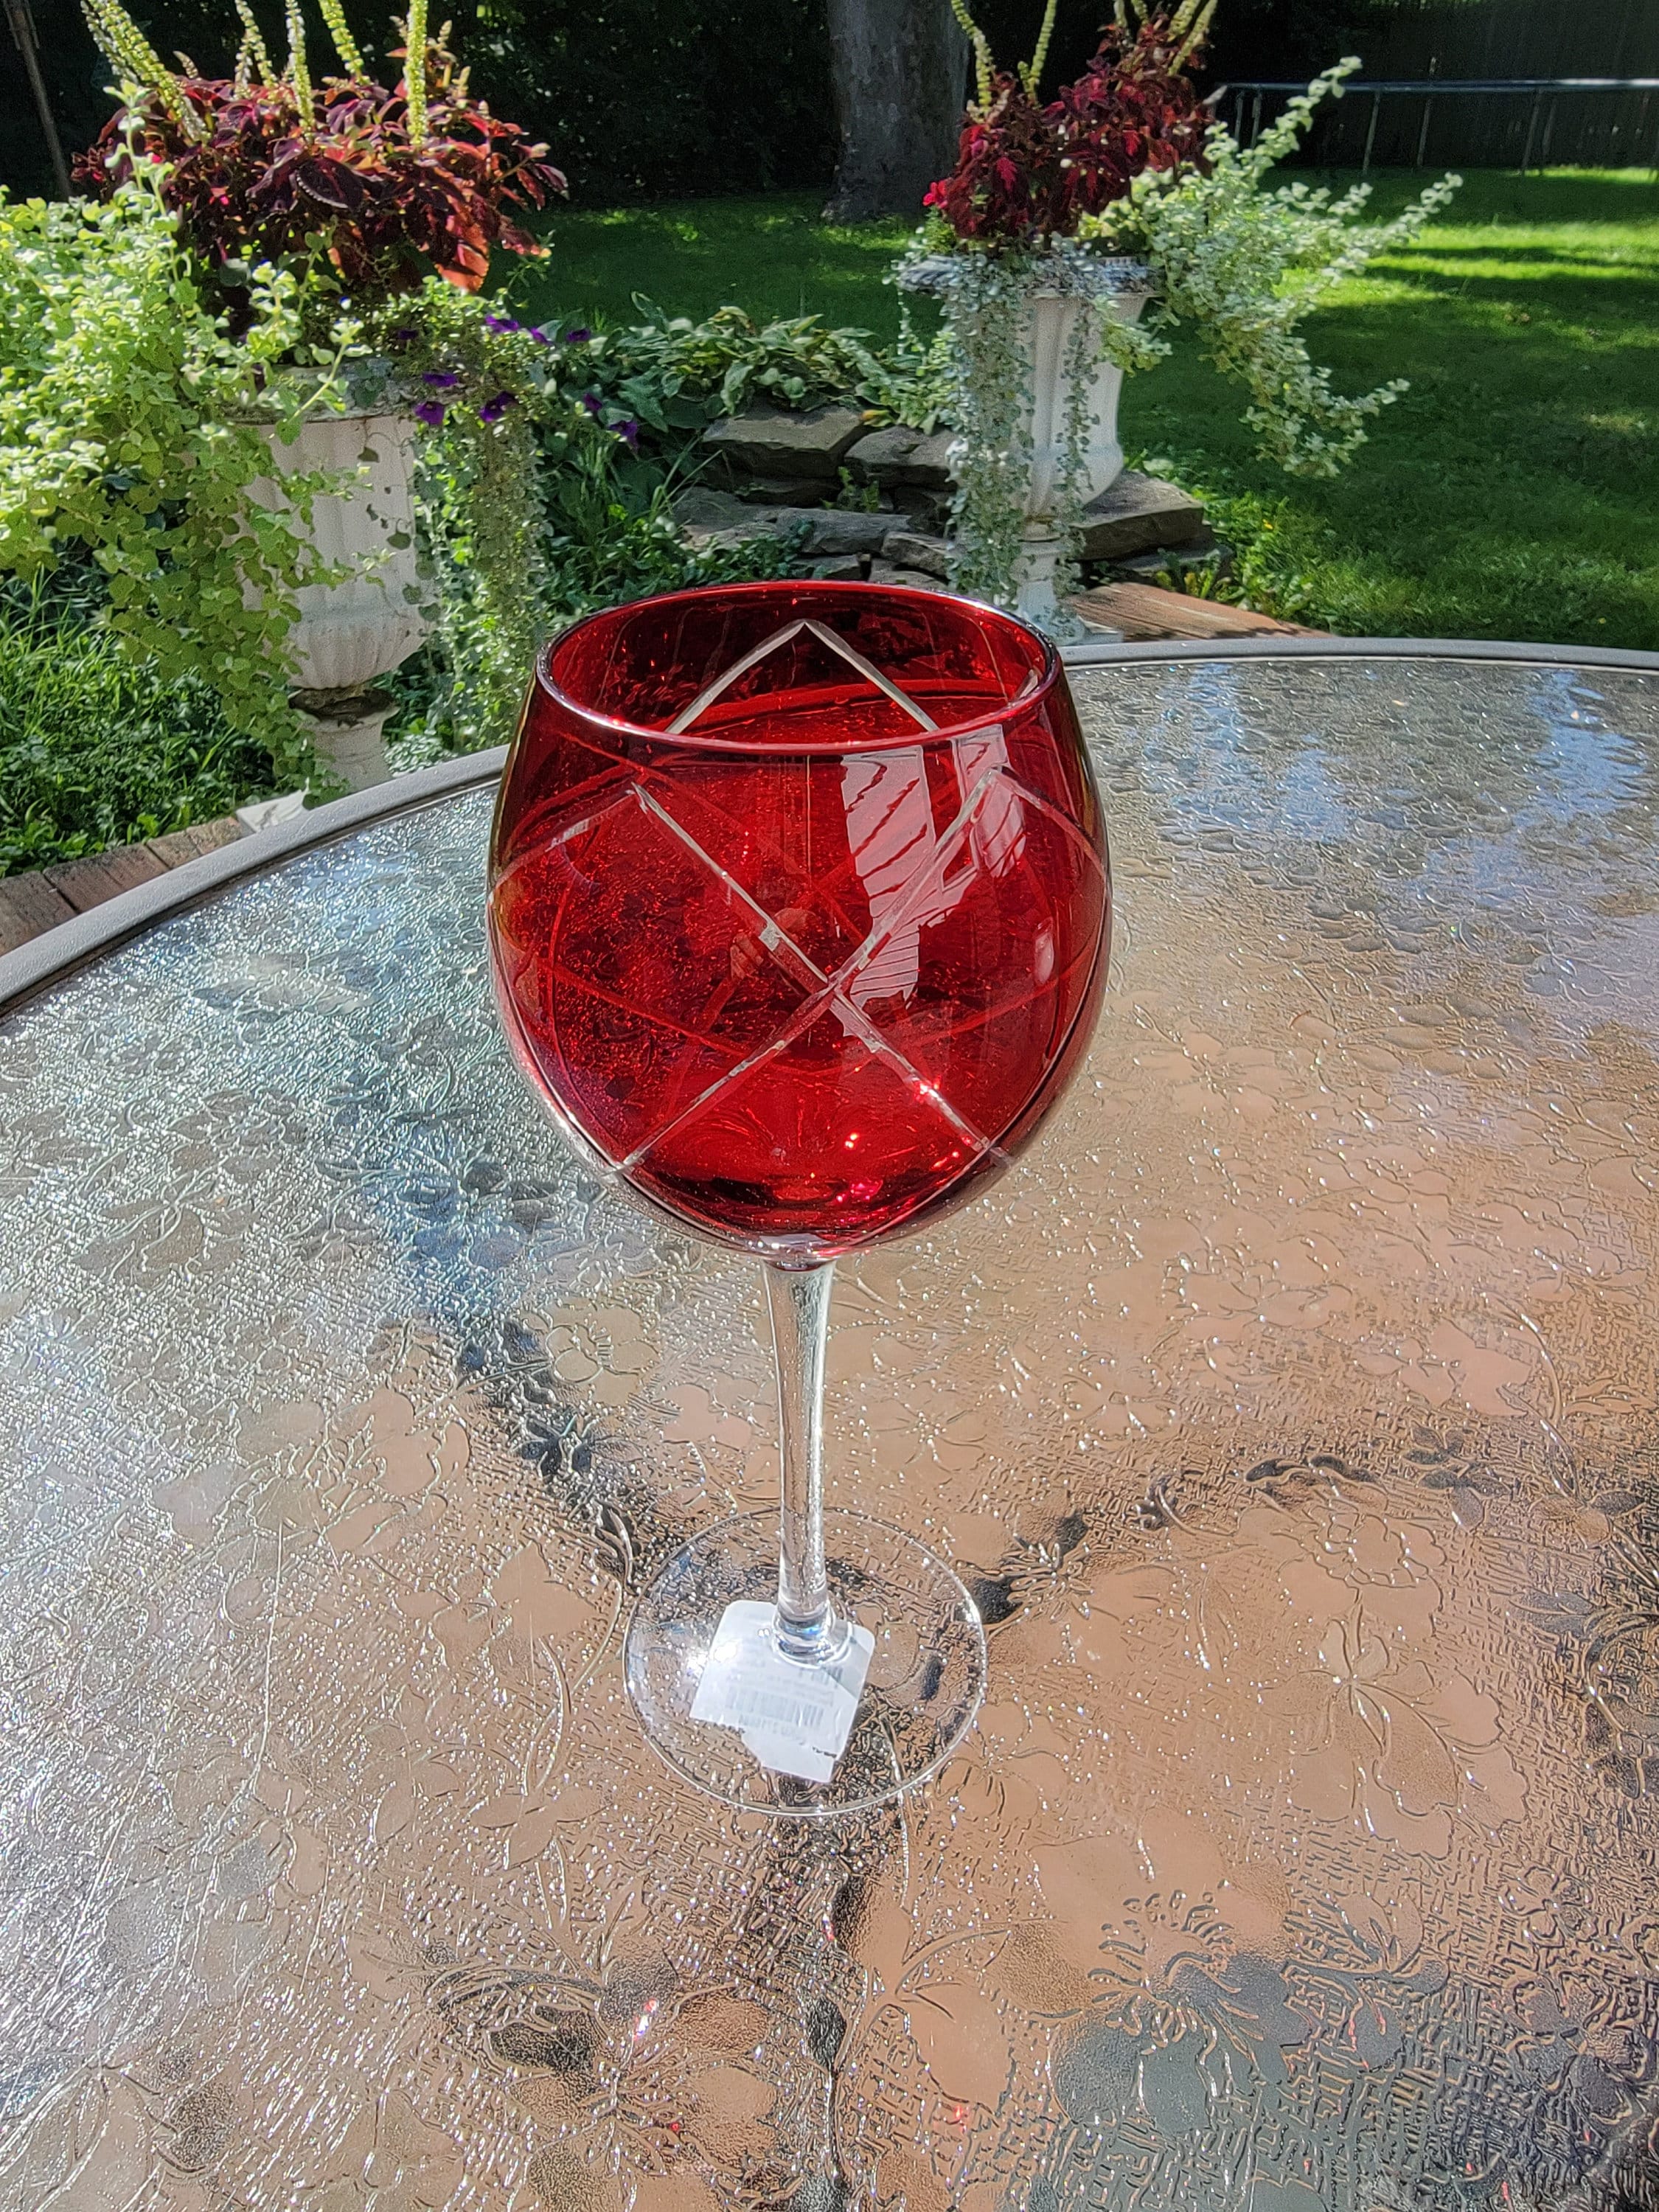   Basics Red Wine Balloon Wine Glasses, 20-Ounce